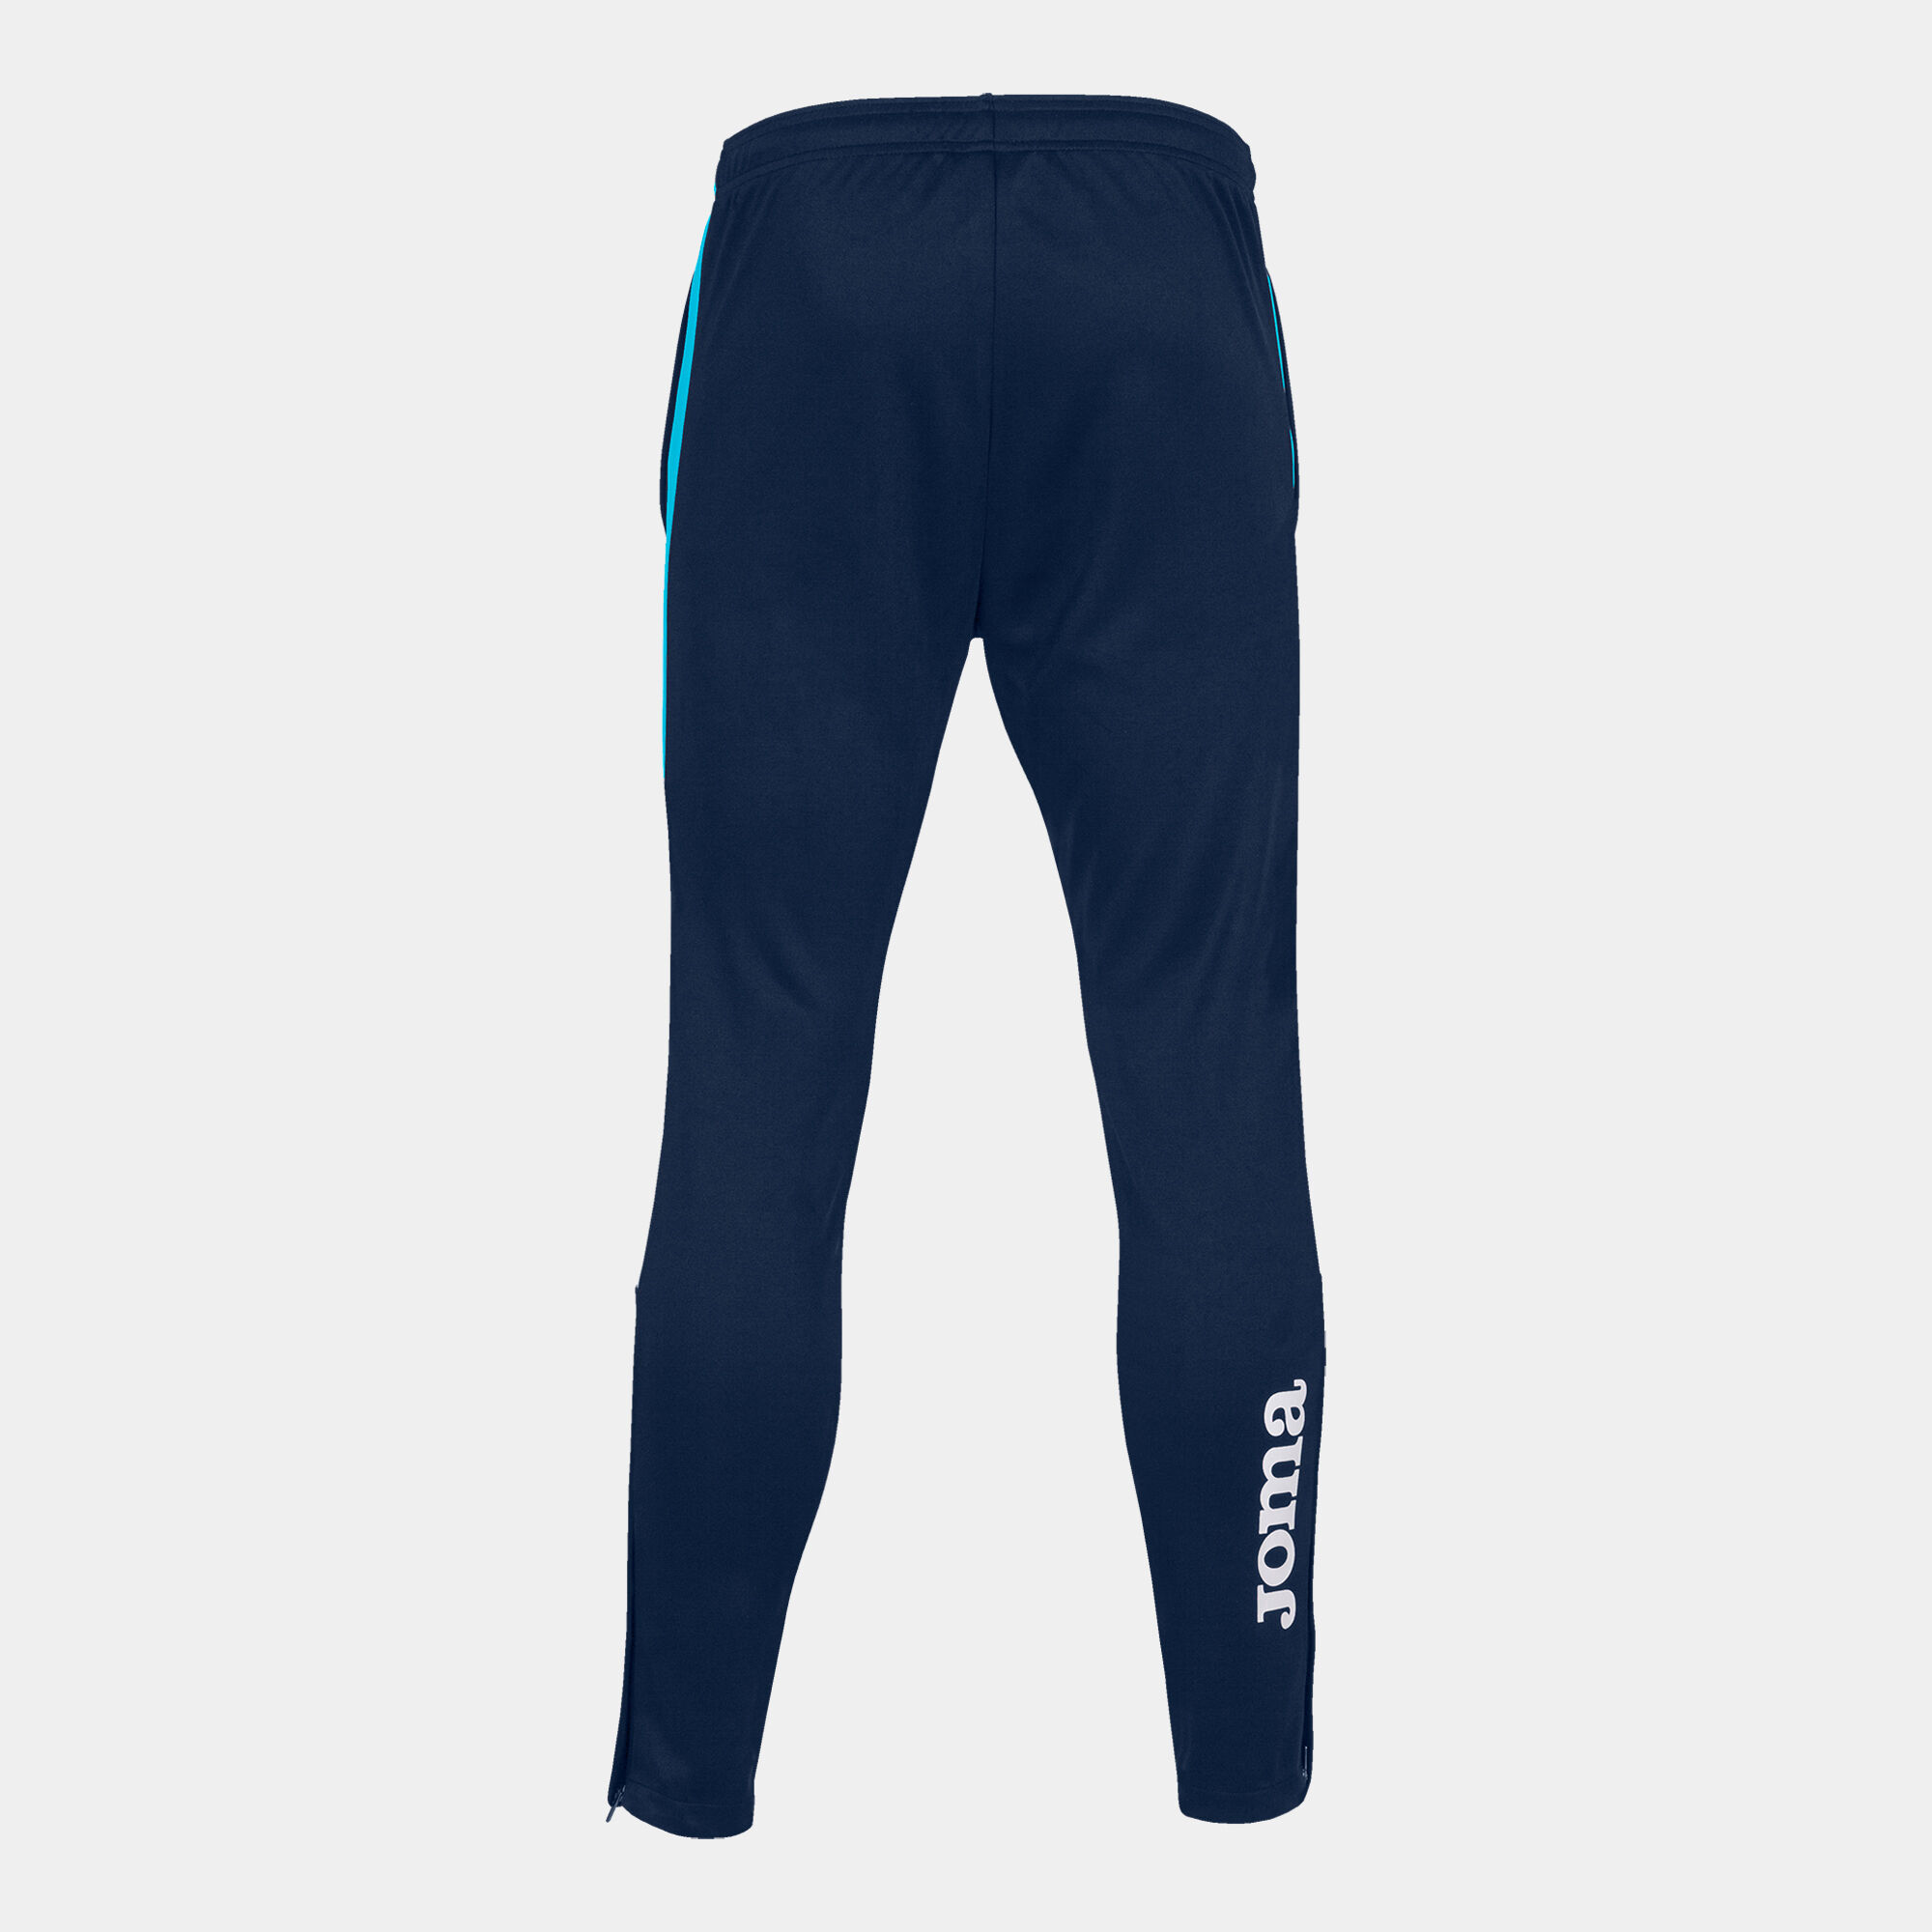 Pantalone lungo uomo Eco Championship blu navy turchese fluorescente